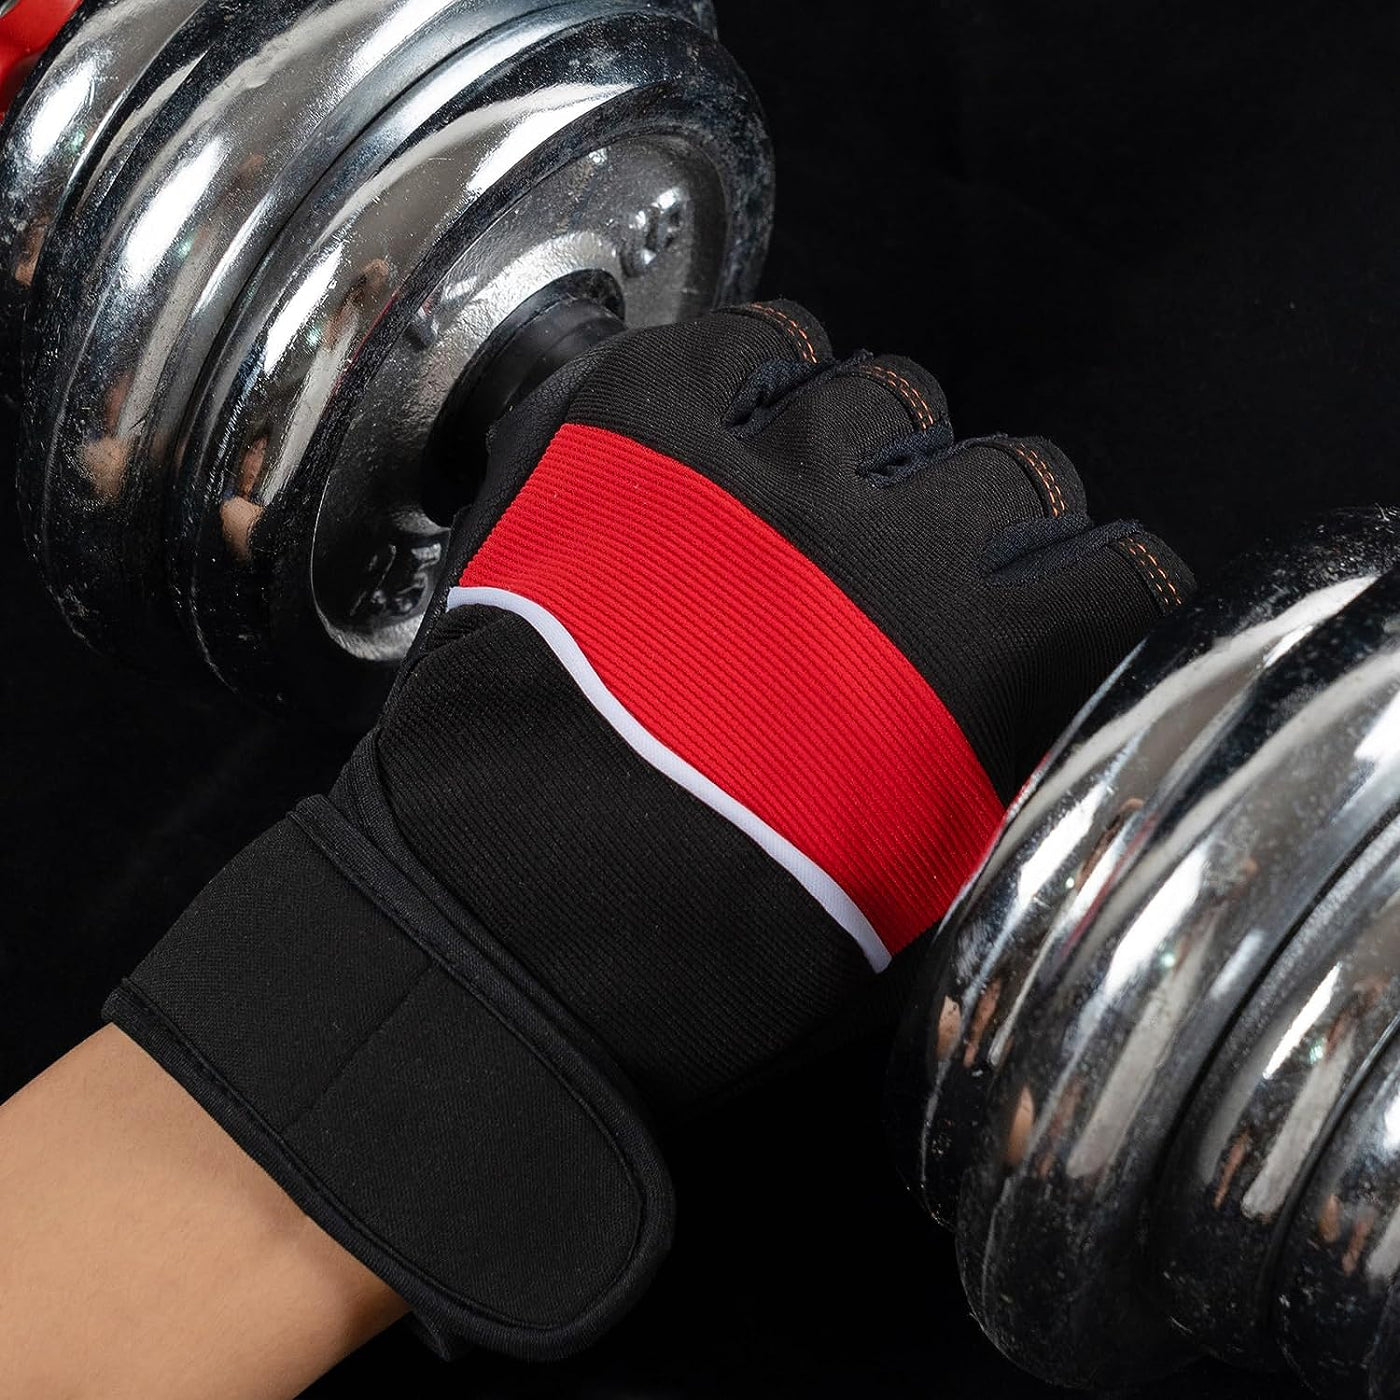 GCSIOM Fingerless Exercise Gloves Adjustable Wrist Wraps